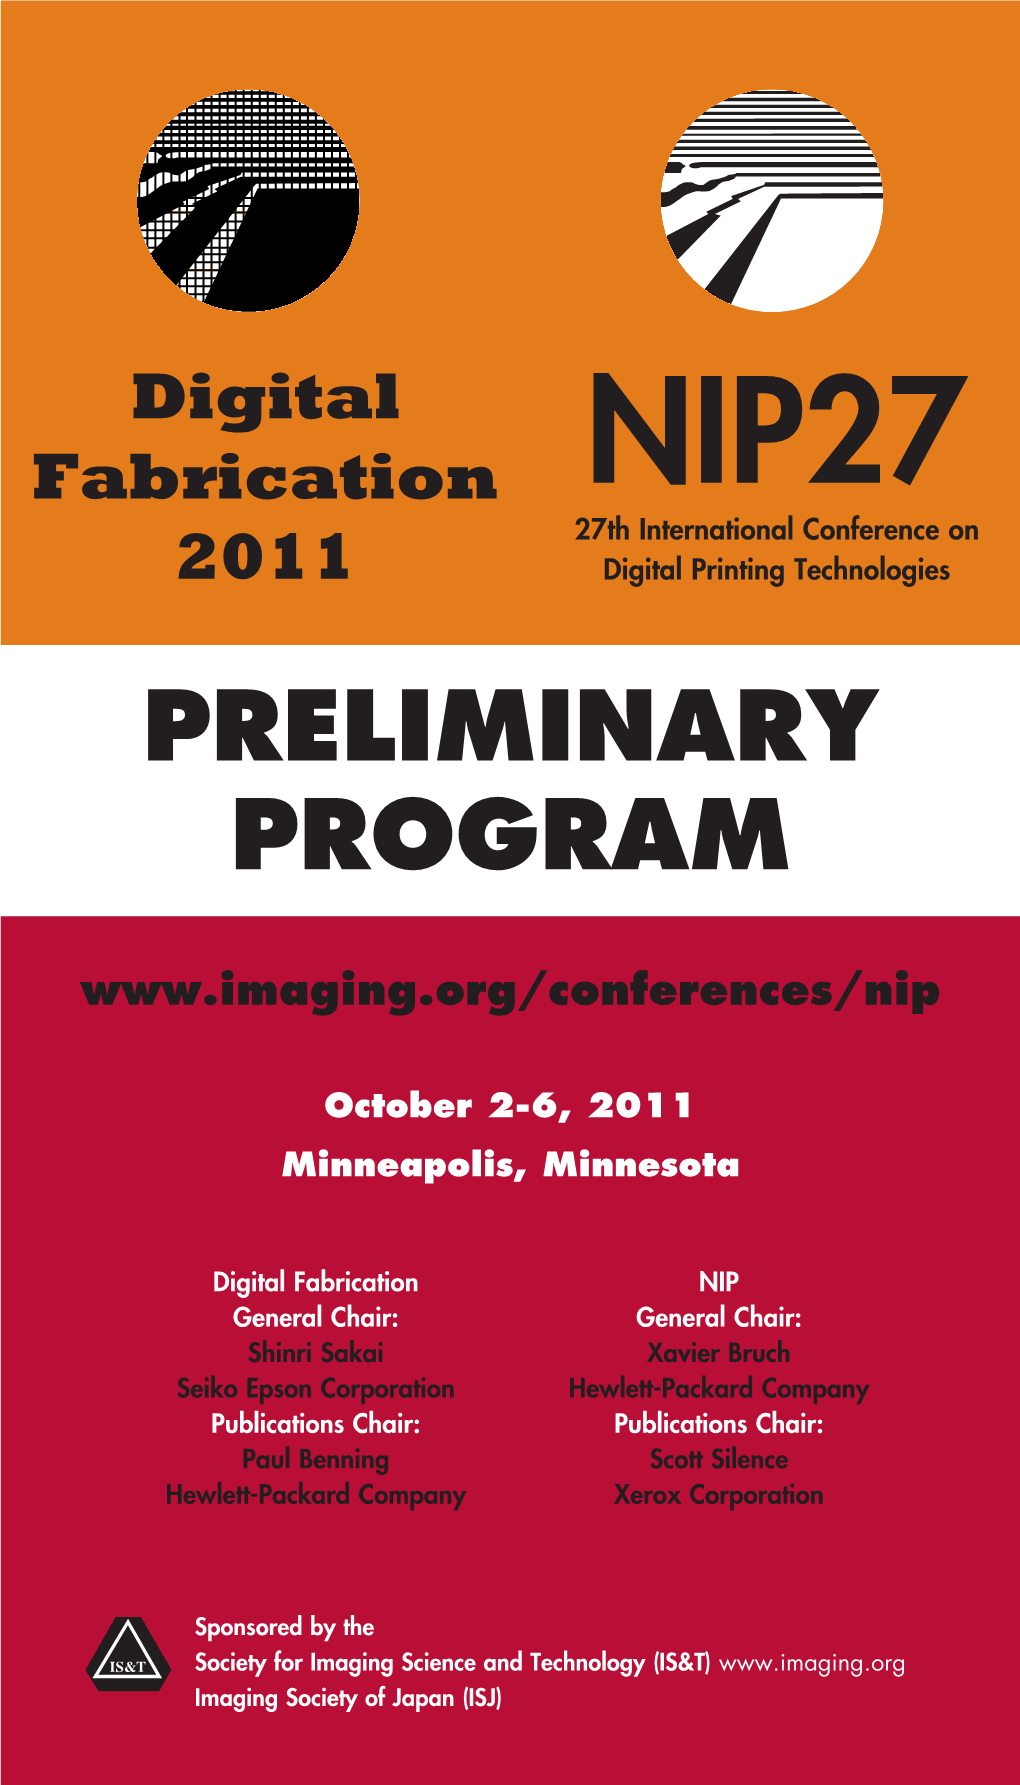 NIP 27 and Digital Fabrication 2011 Conference Preliminary Program